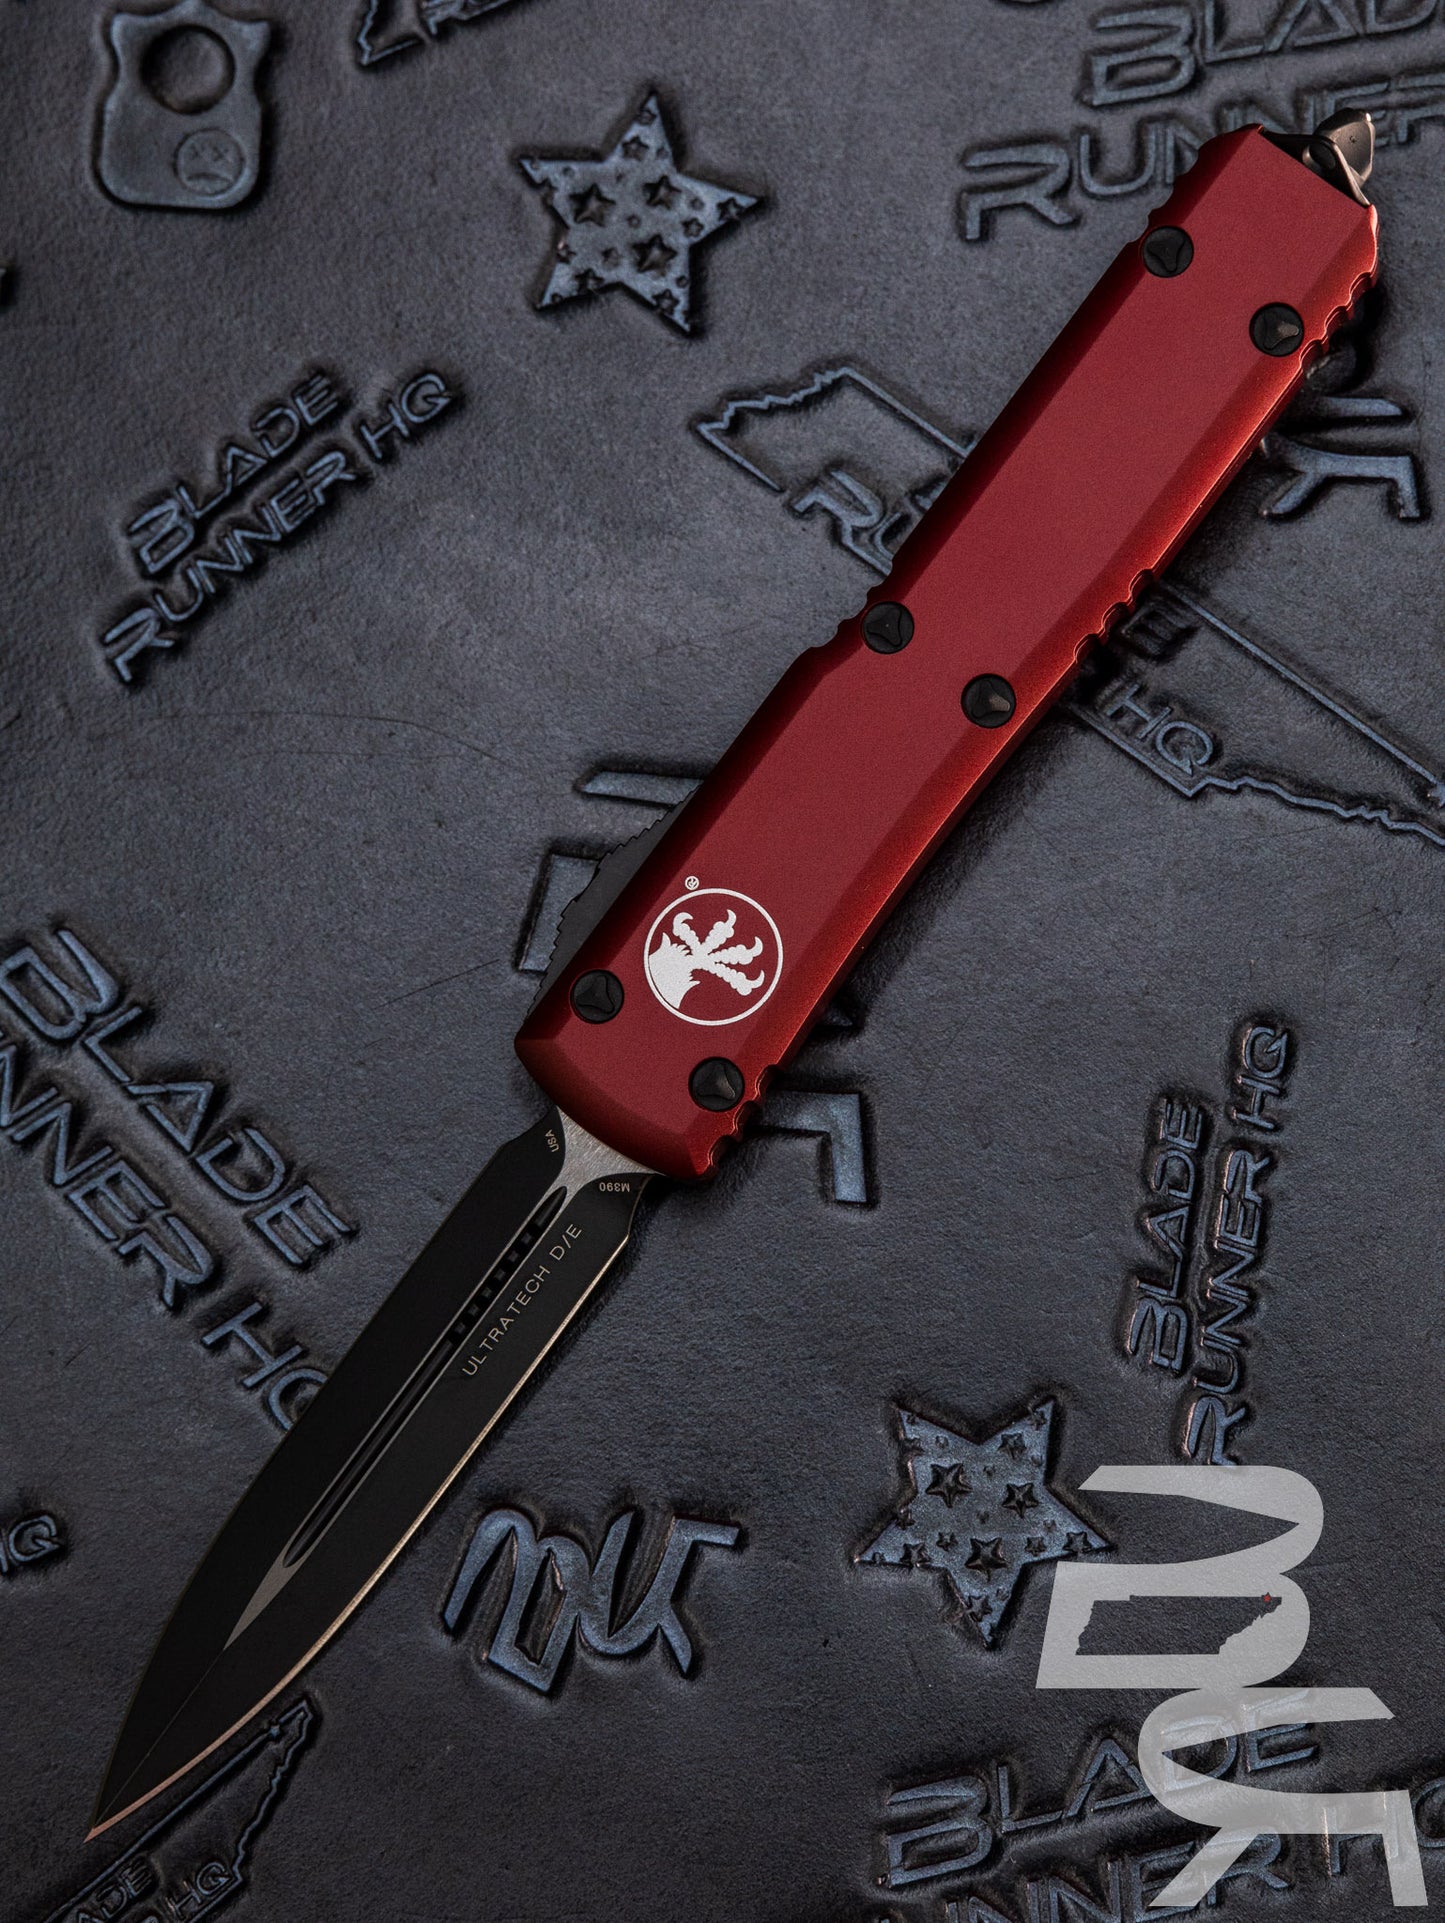 Microtech 122-1MR Ultratech D/E - Merlot Red Handle - Black Blade